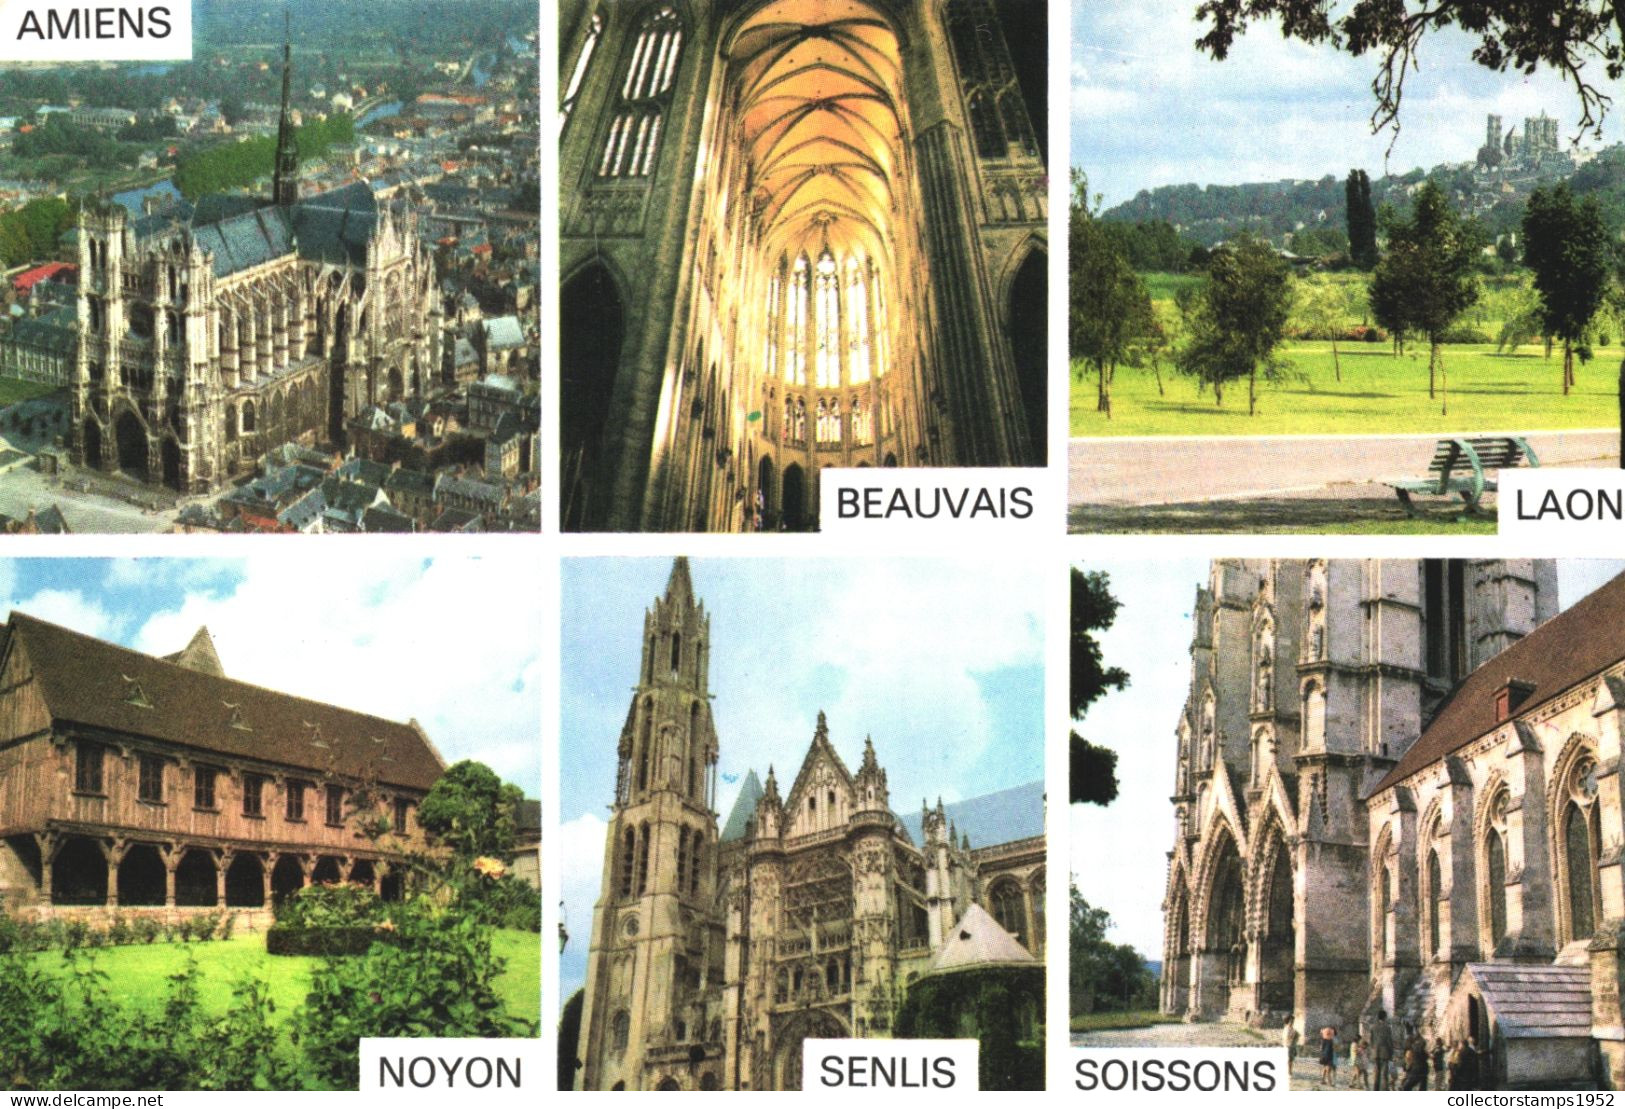 PICARDIE, MULTIPLE VIEWS, CHURCH, PARK, ARCHITECTURE, FRANCE - Picardie